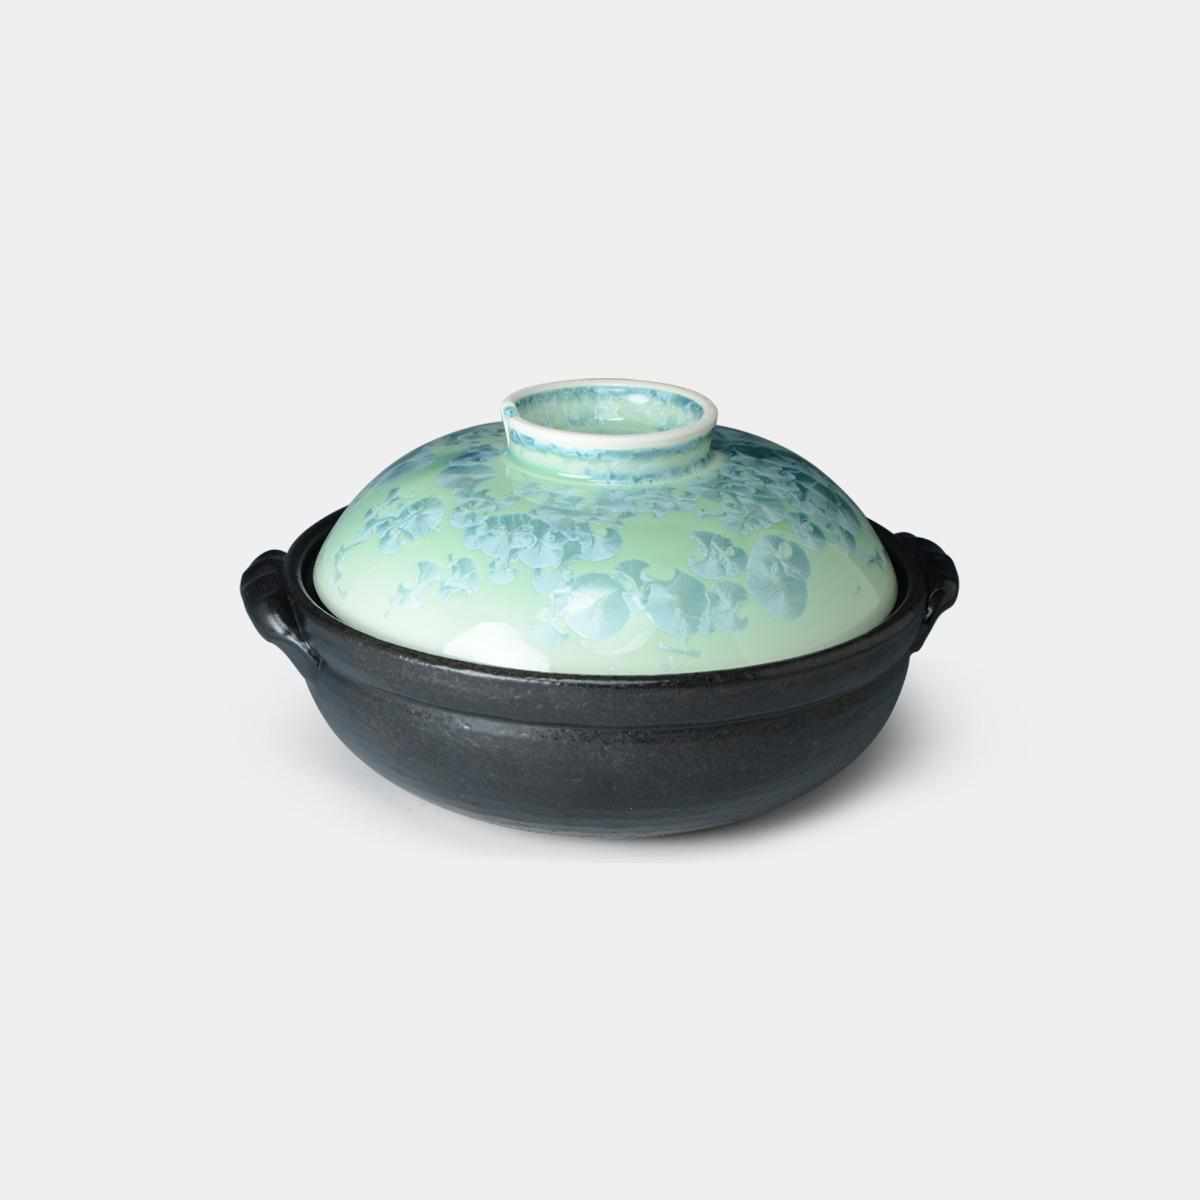 【土鍋】花結晶 (緑) ガス&IH用 | 京焼-清水焼 | 陶葊